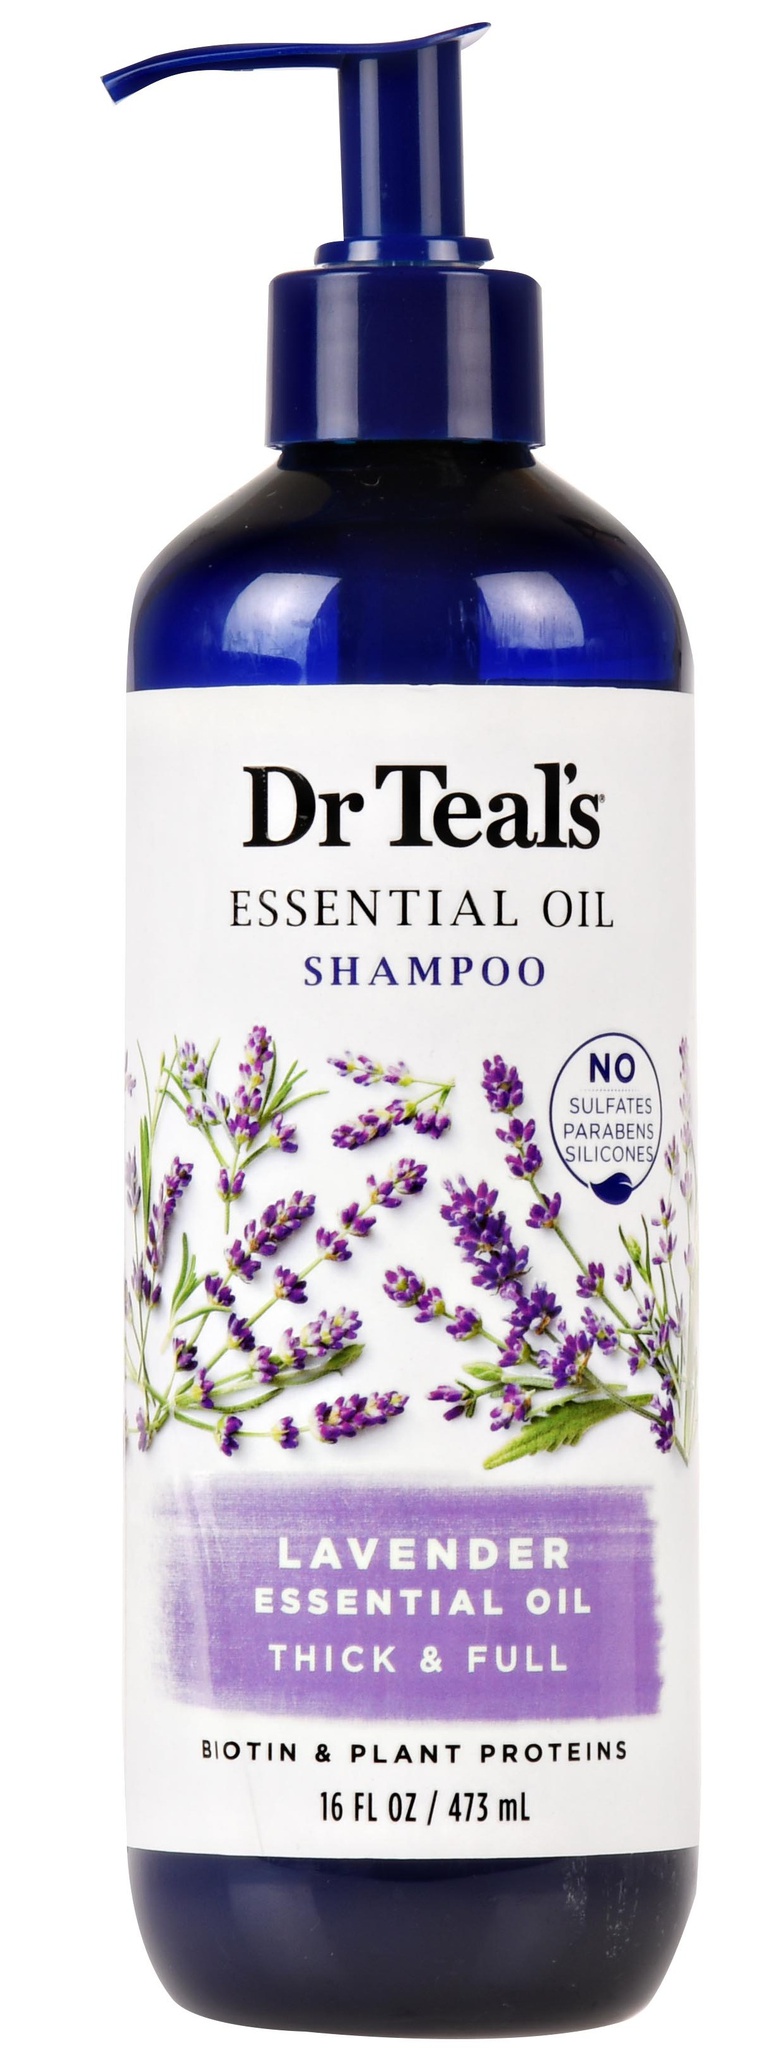 Dr. Teal's Essential Oil Shampoo, Lavender